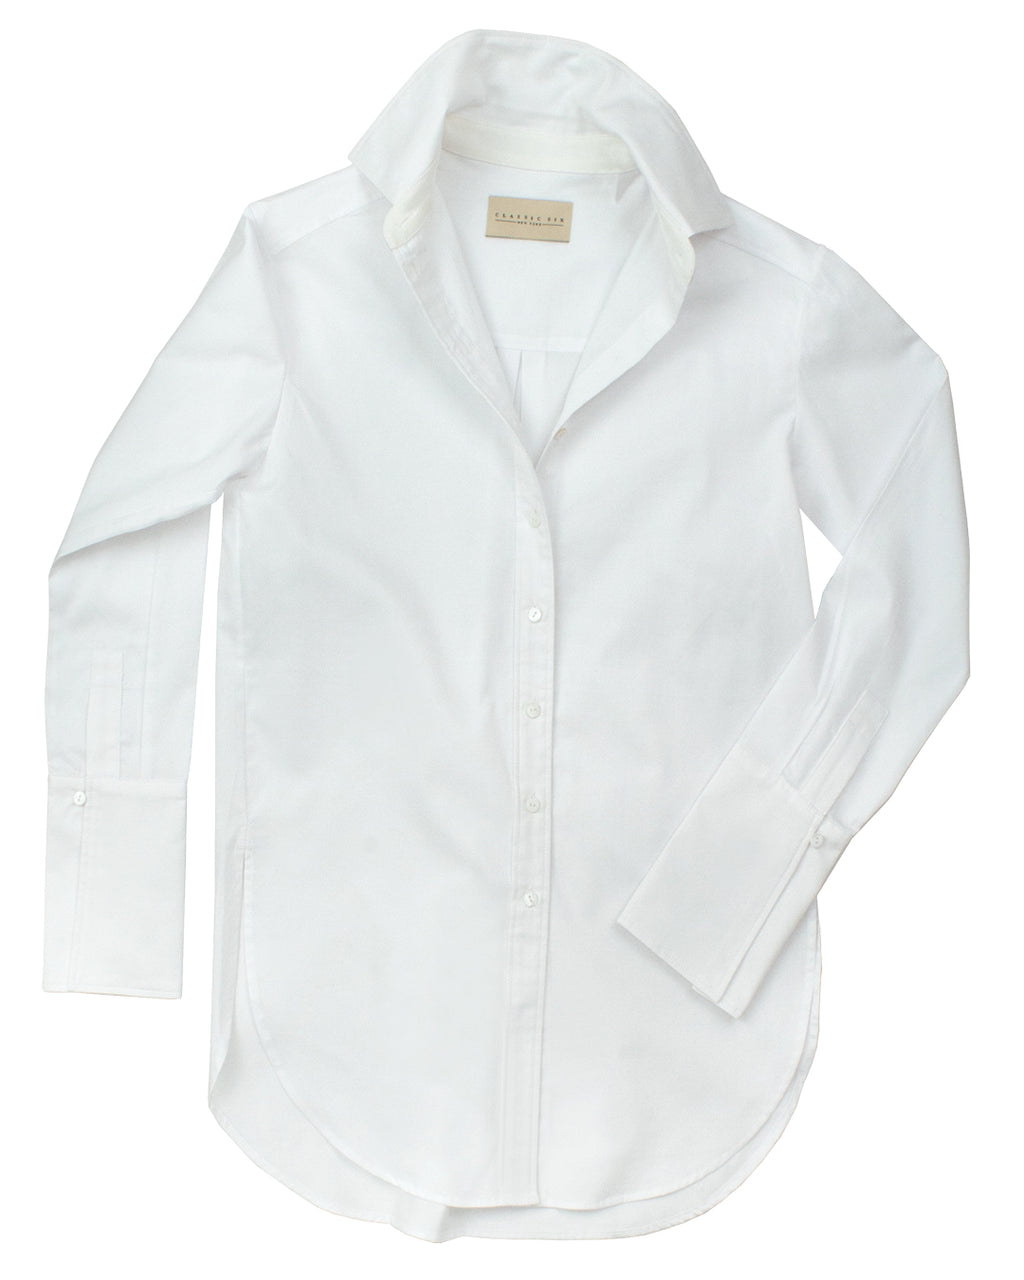 Ladies Classic Formal Shirt - White